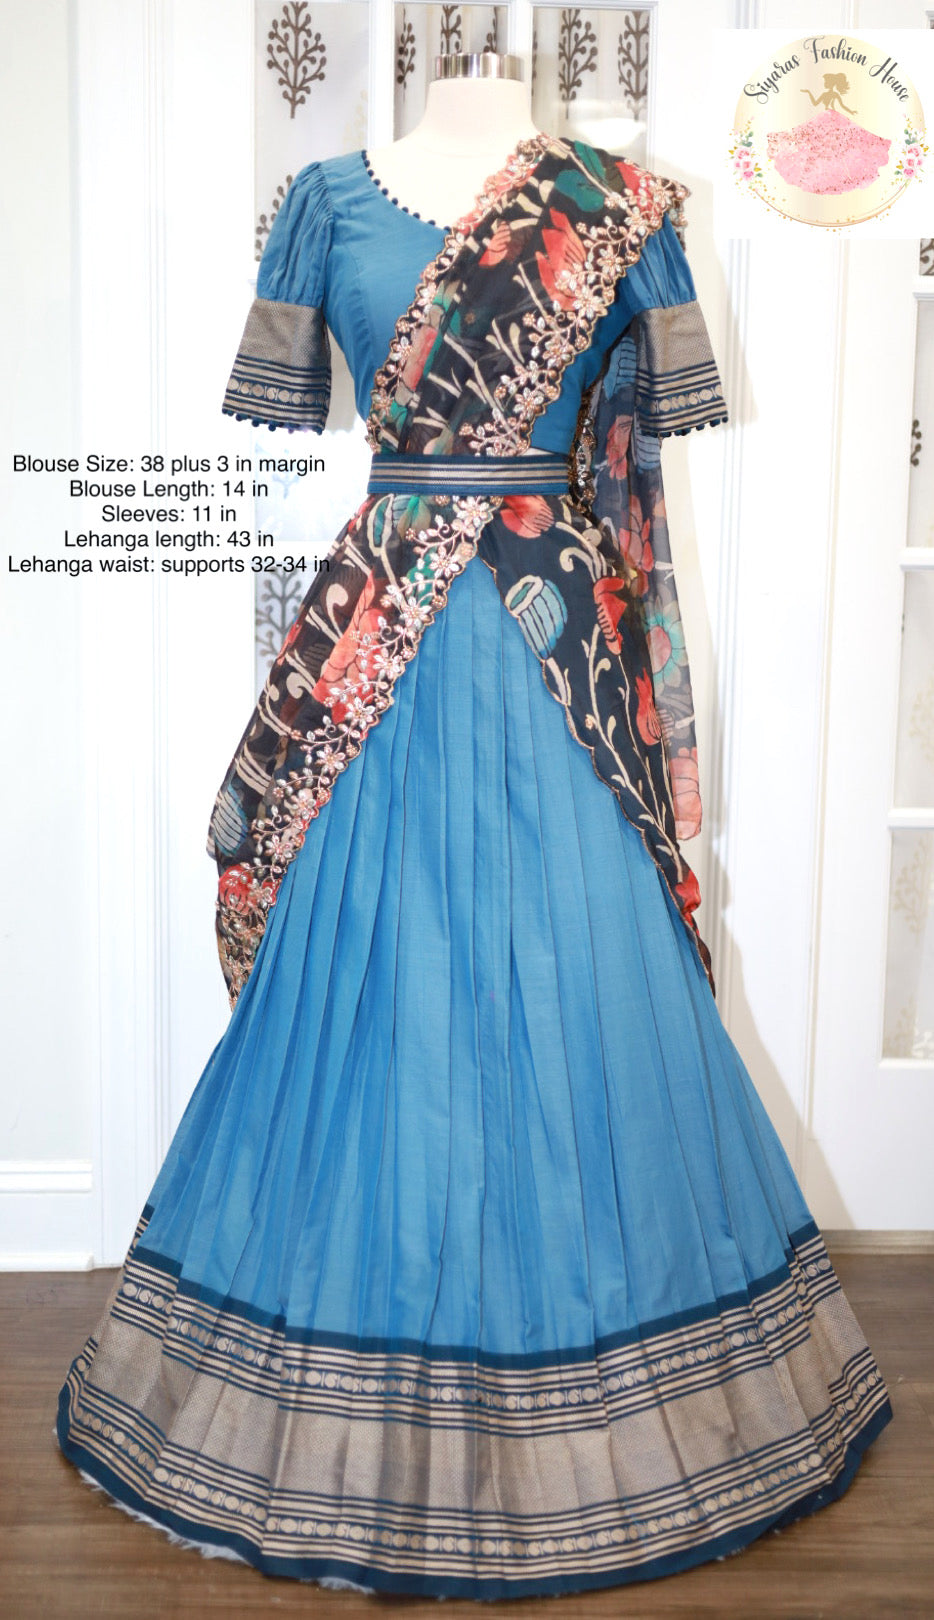 Traditional Celestial blue Narayanpet cotton teens half saree/langa voni with hip belt same fabric